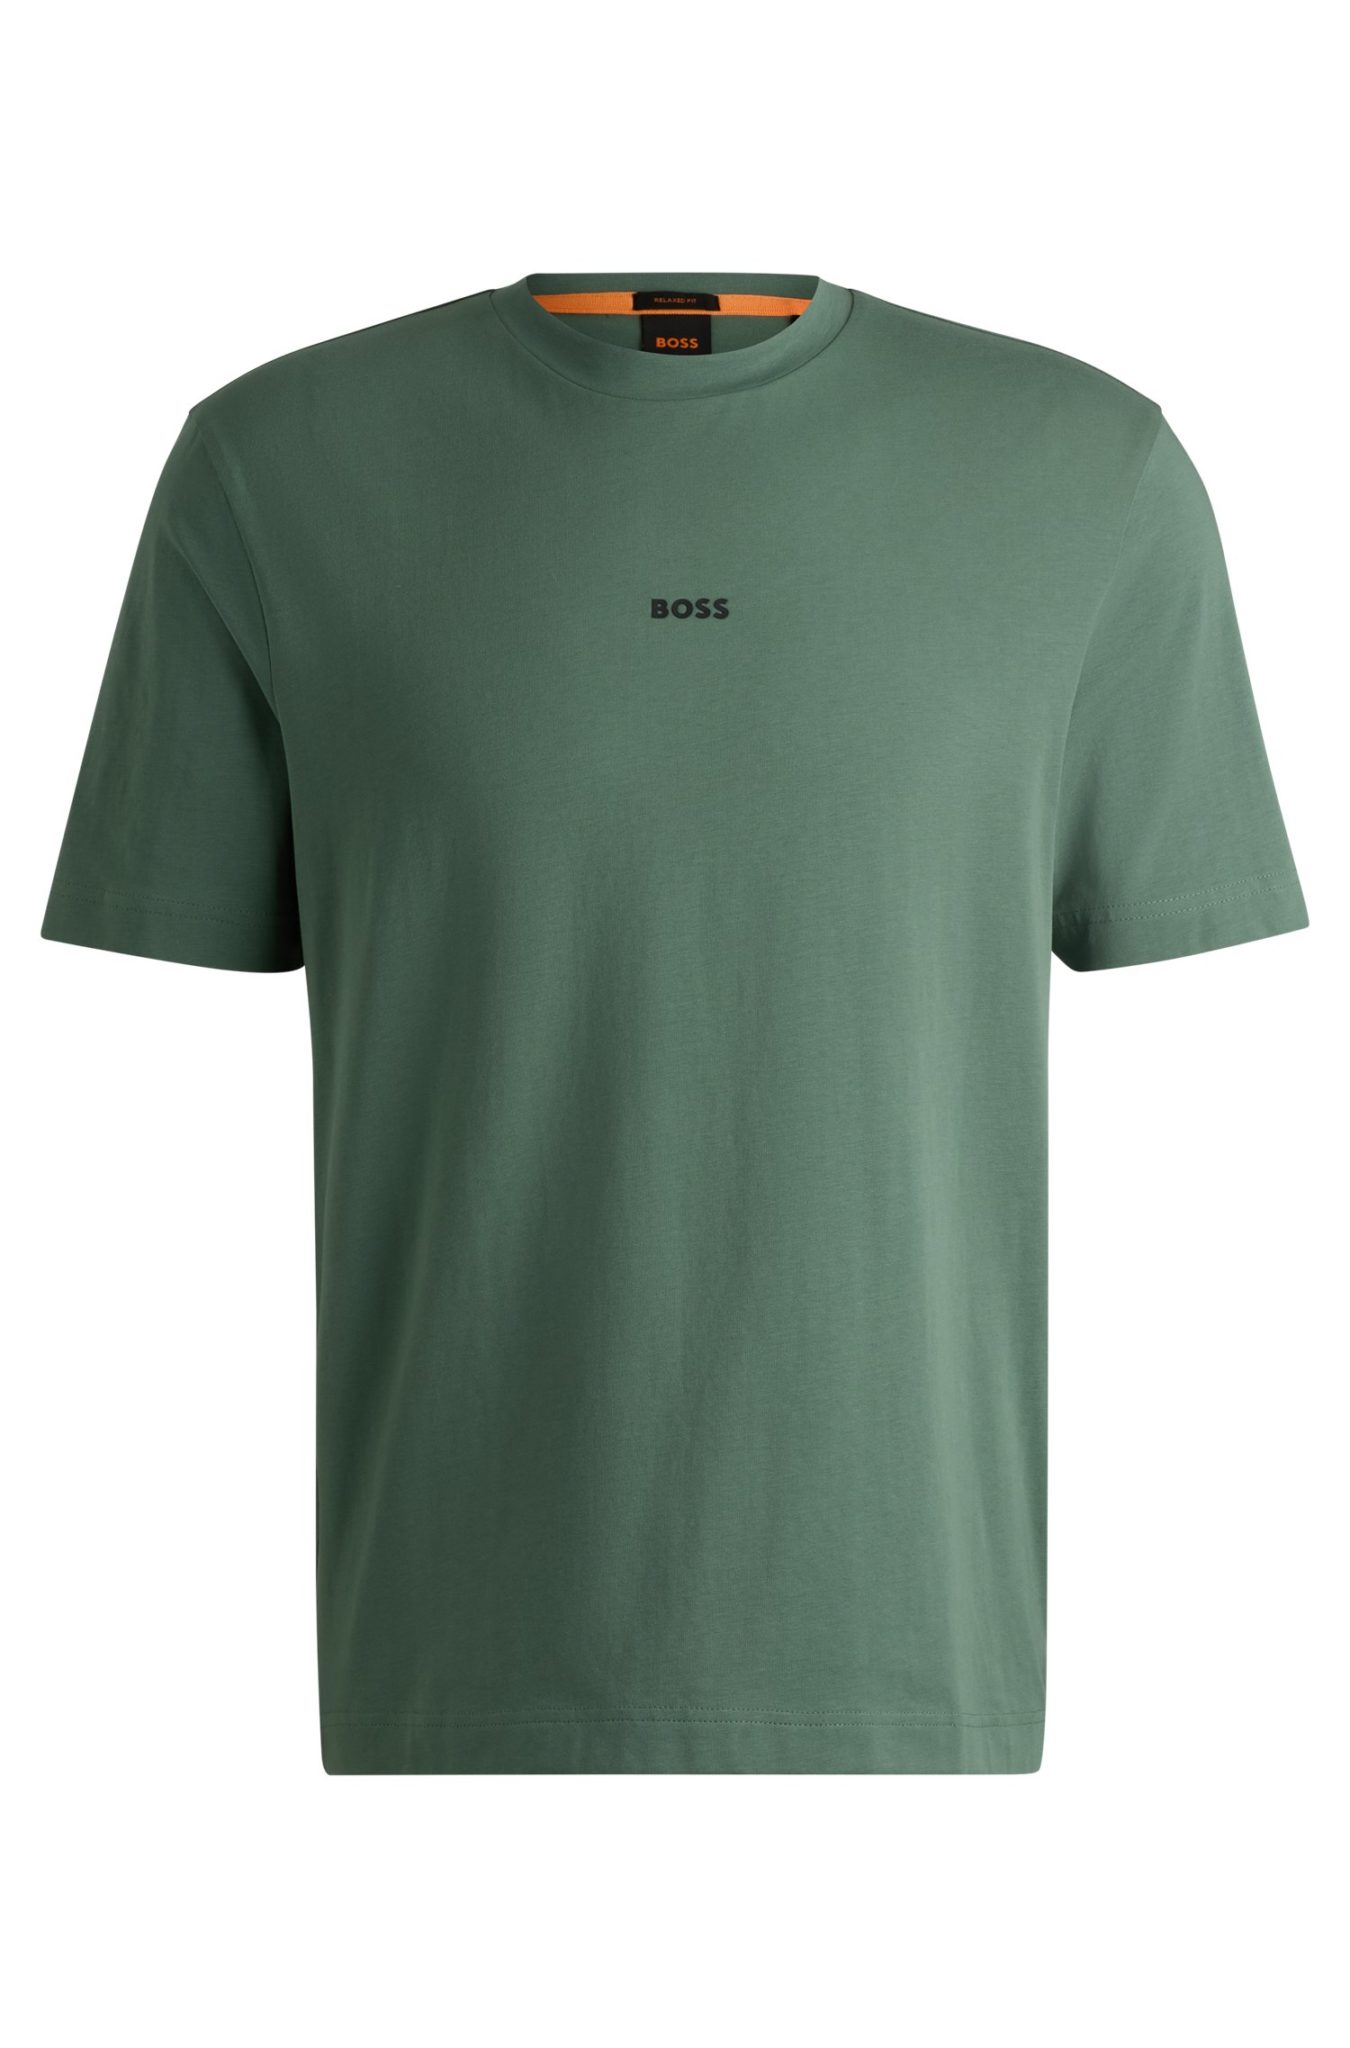 Hugo Boss T-shirt Relaxed Fit en coton stretch